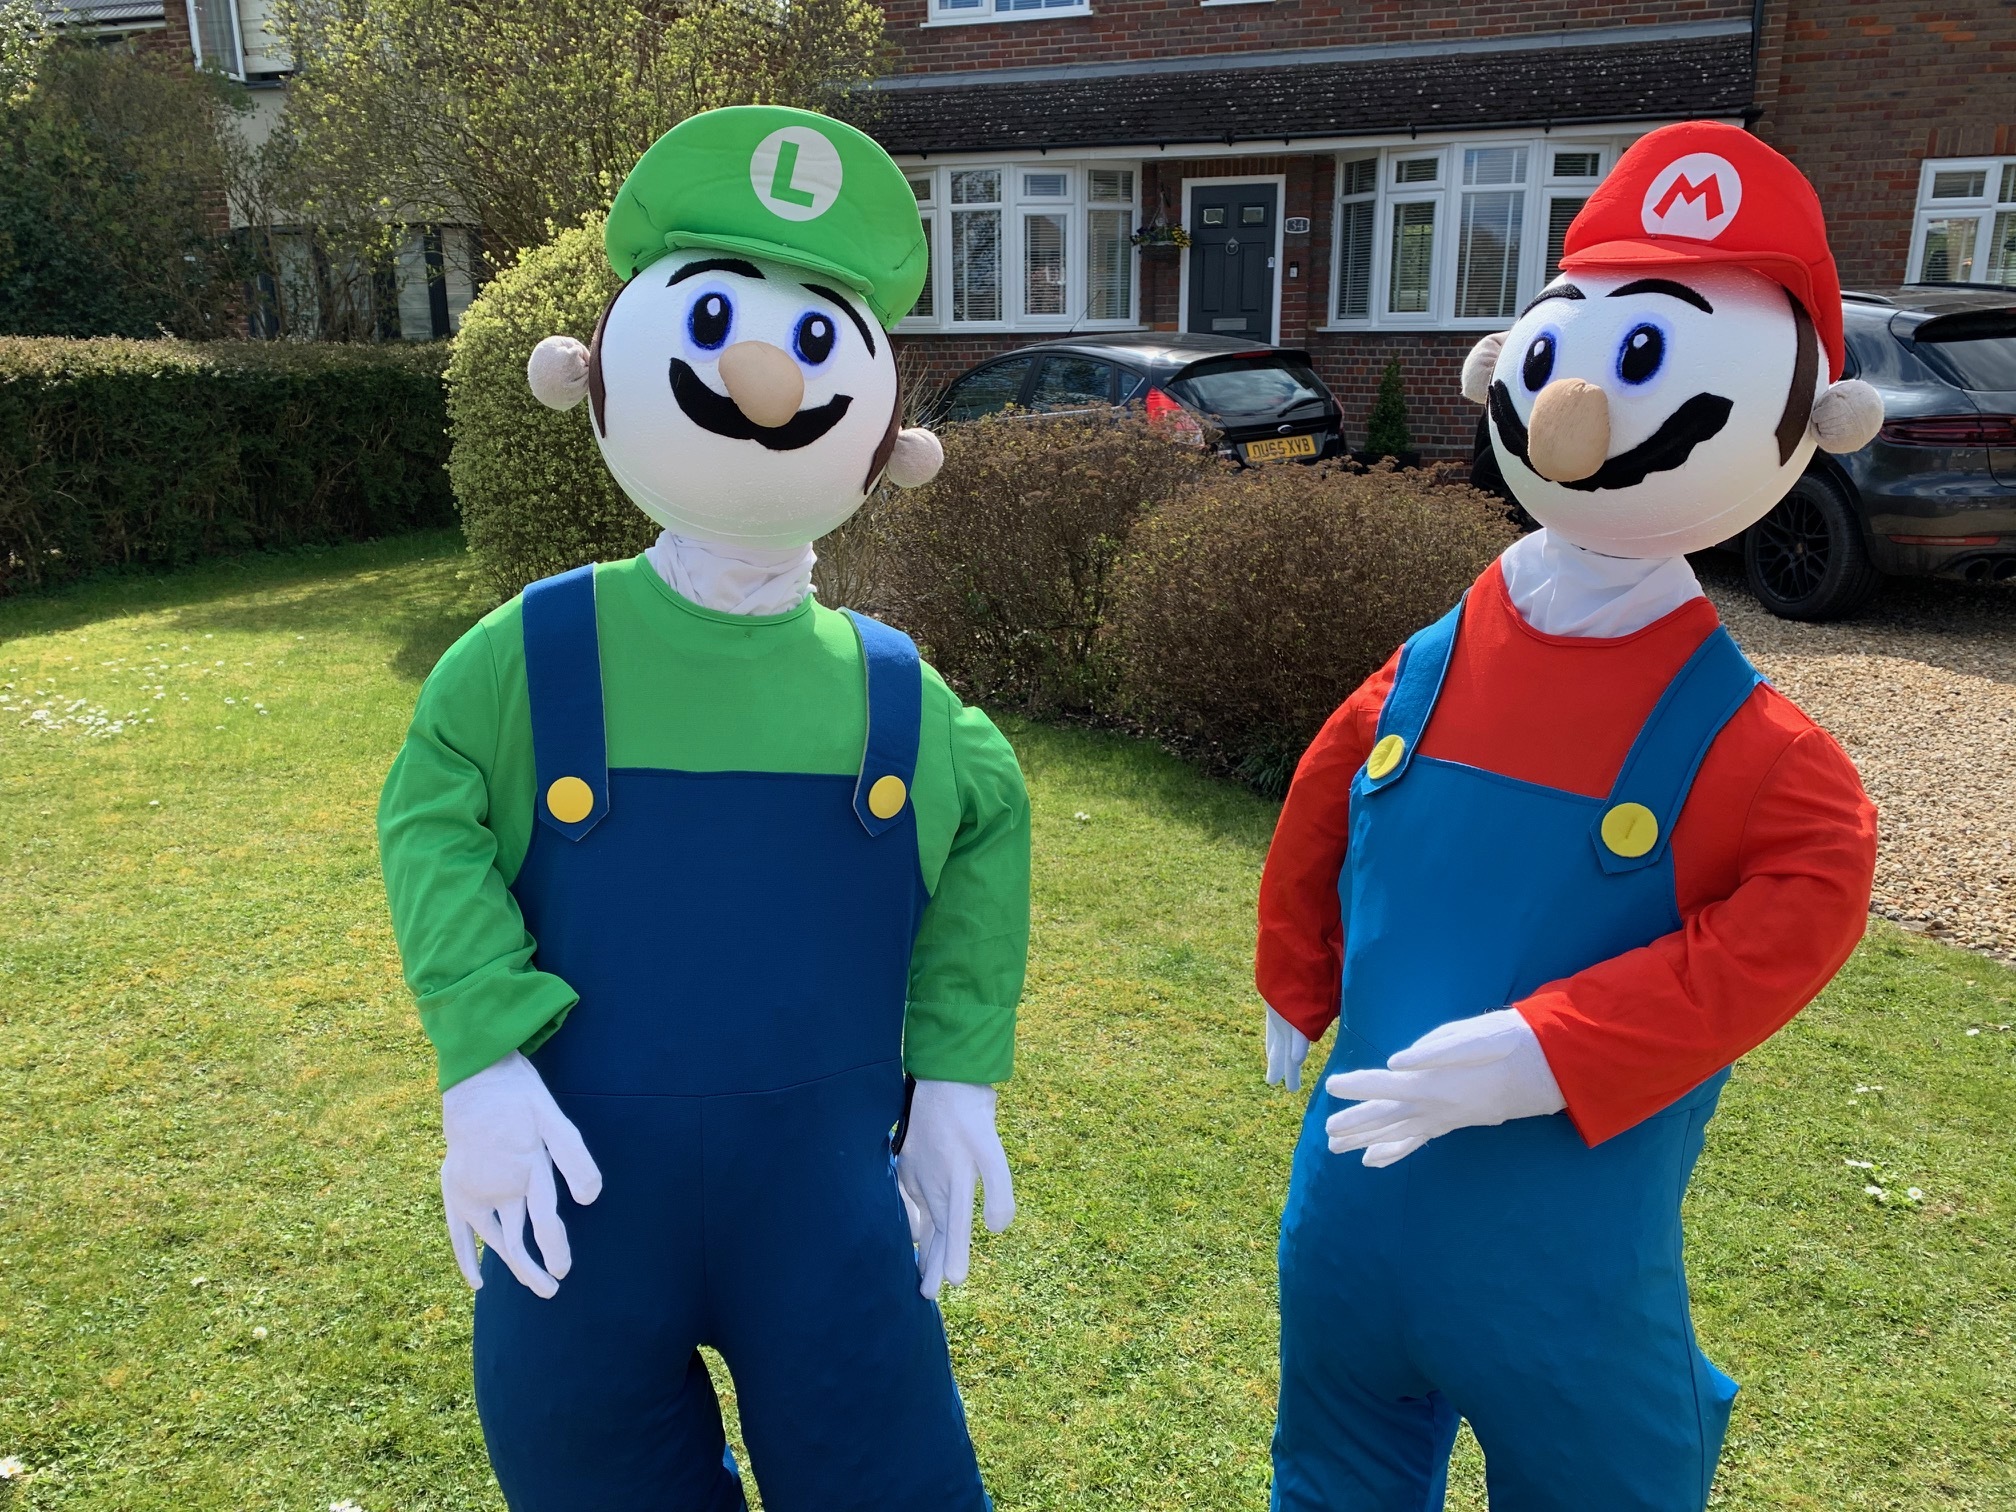 Luigi and Mario also made an appearance 